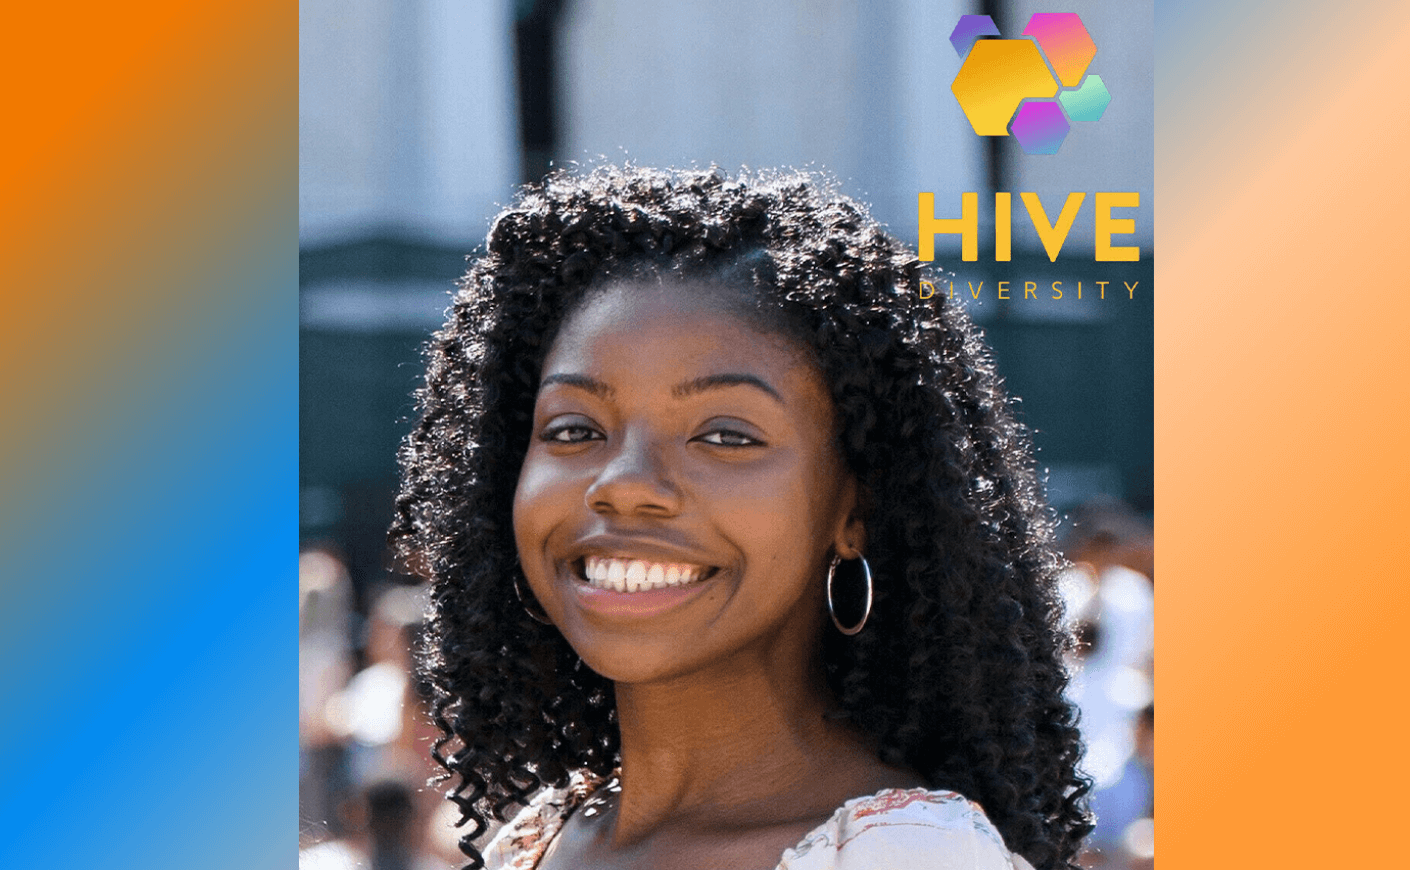 Proud Black college student of Hive University